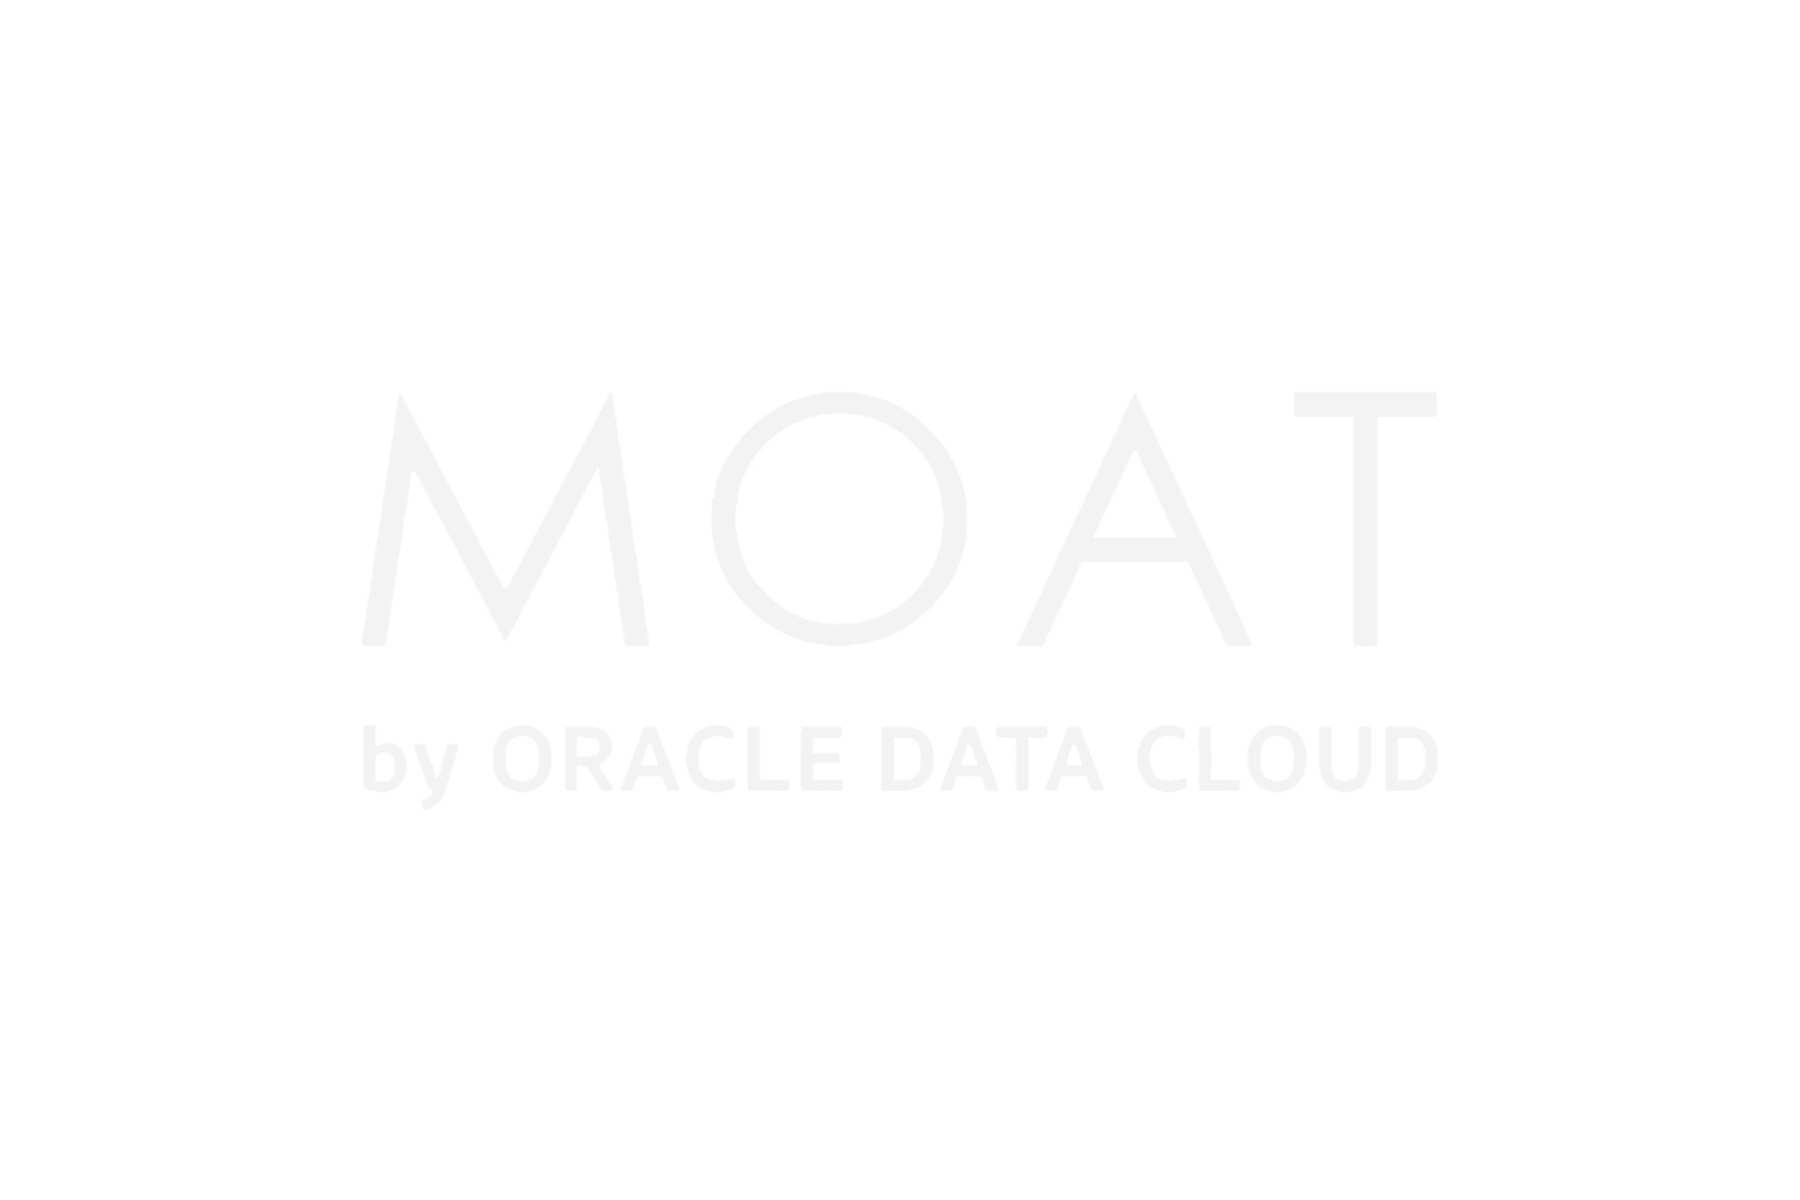 MOAT by Oracle Data Cloud (Copy) (Copy)